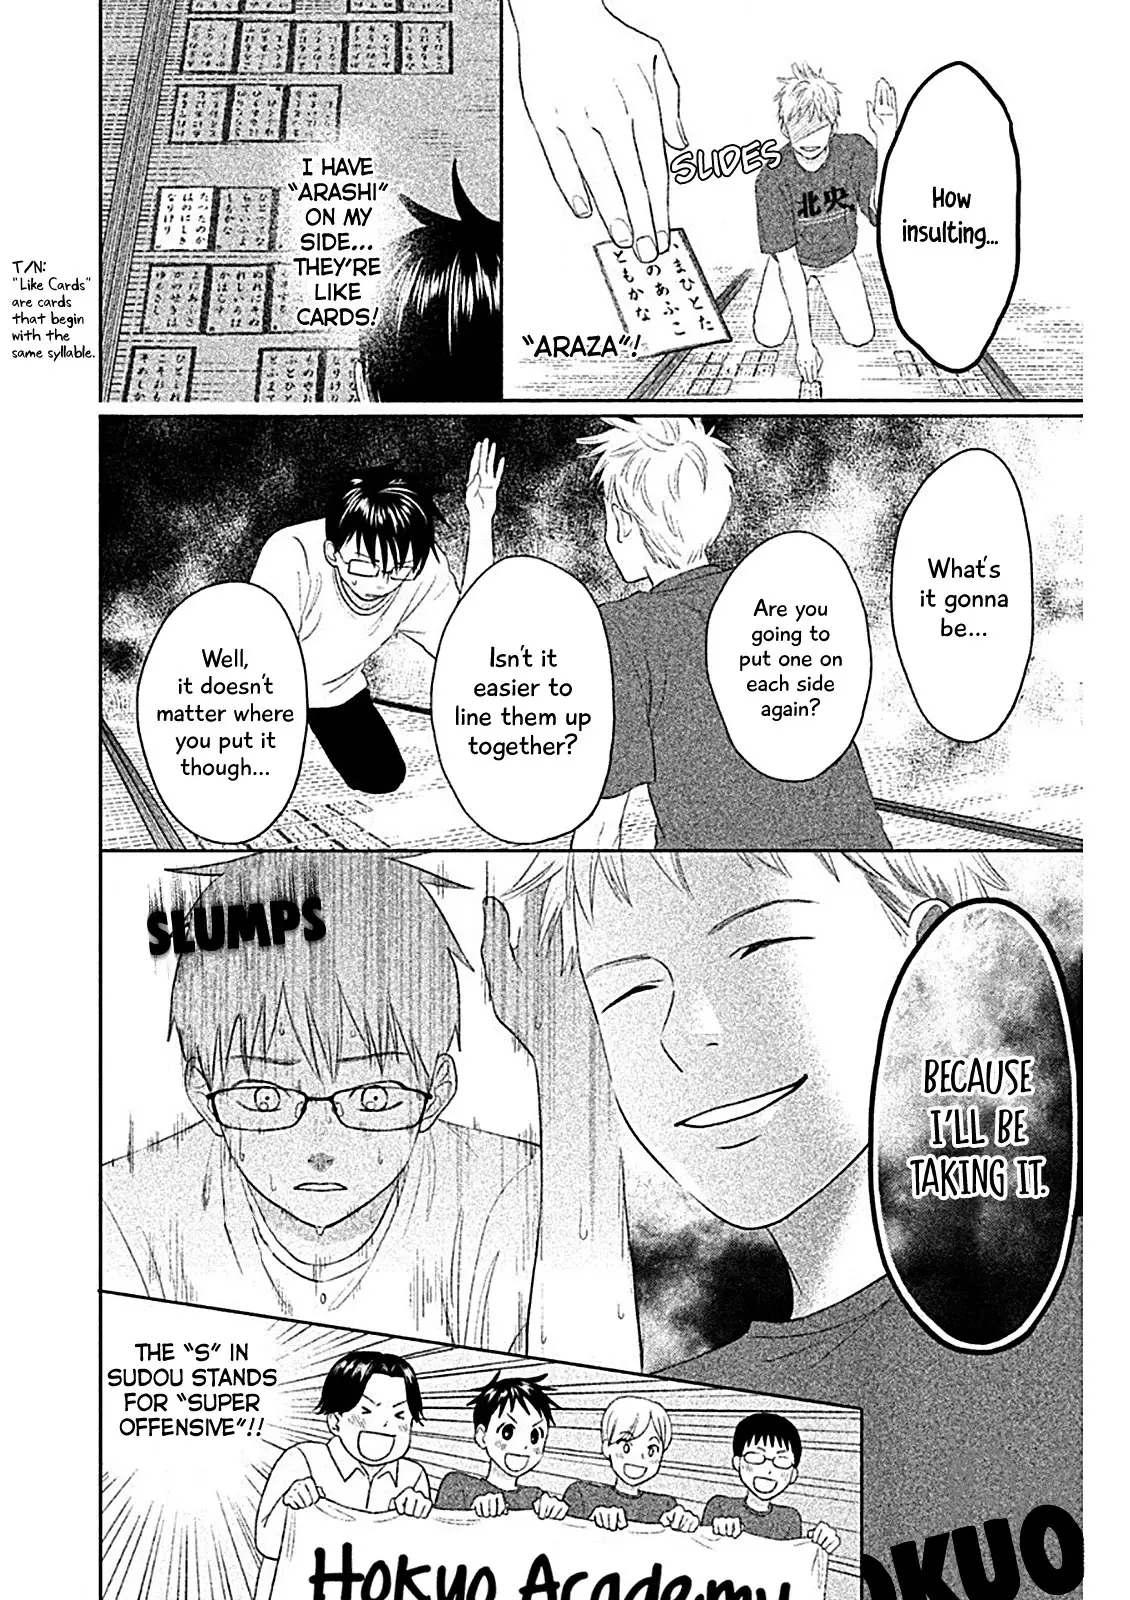 Chihayafuru: Middle School Arc - 6 page 23